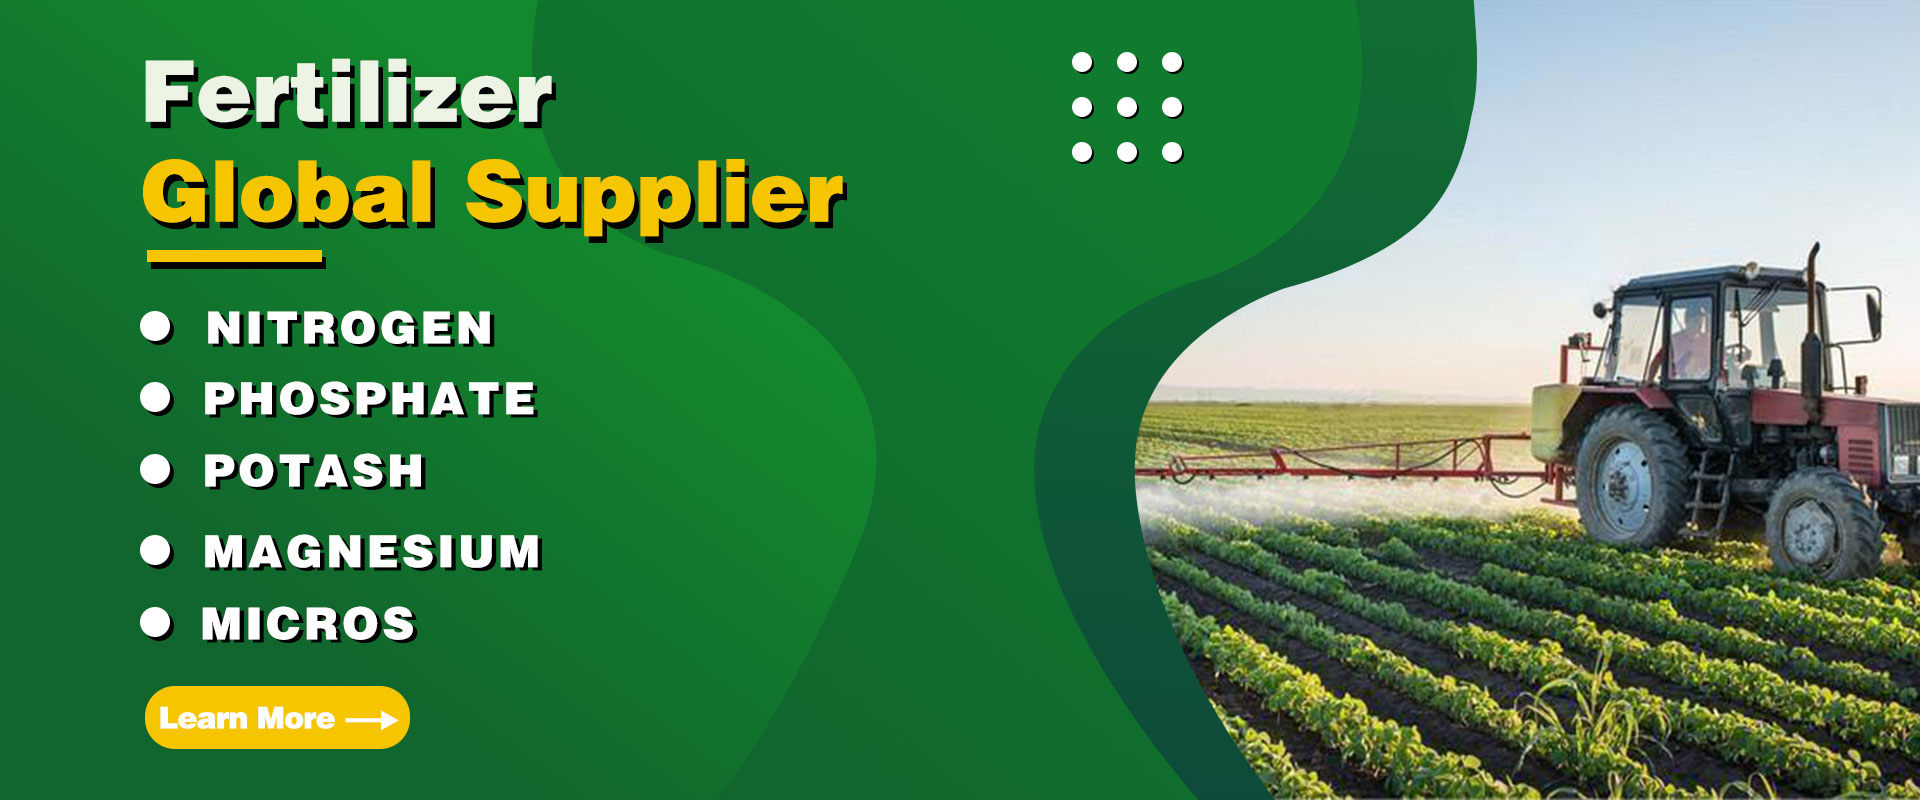 Fertilizer Global Supplier